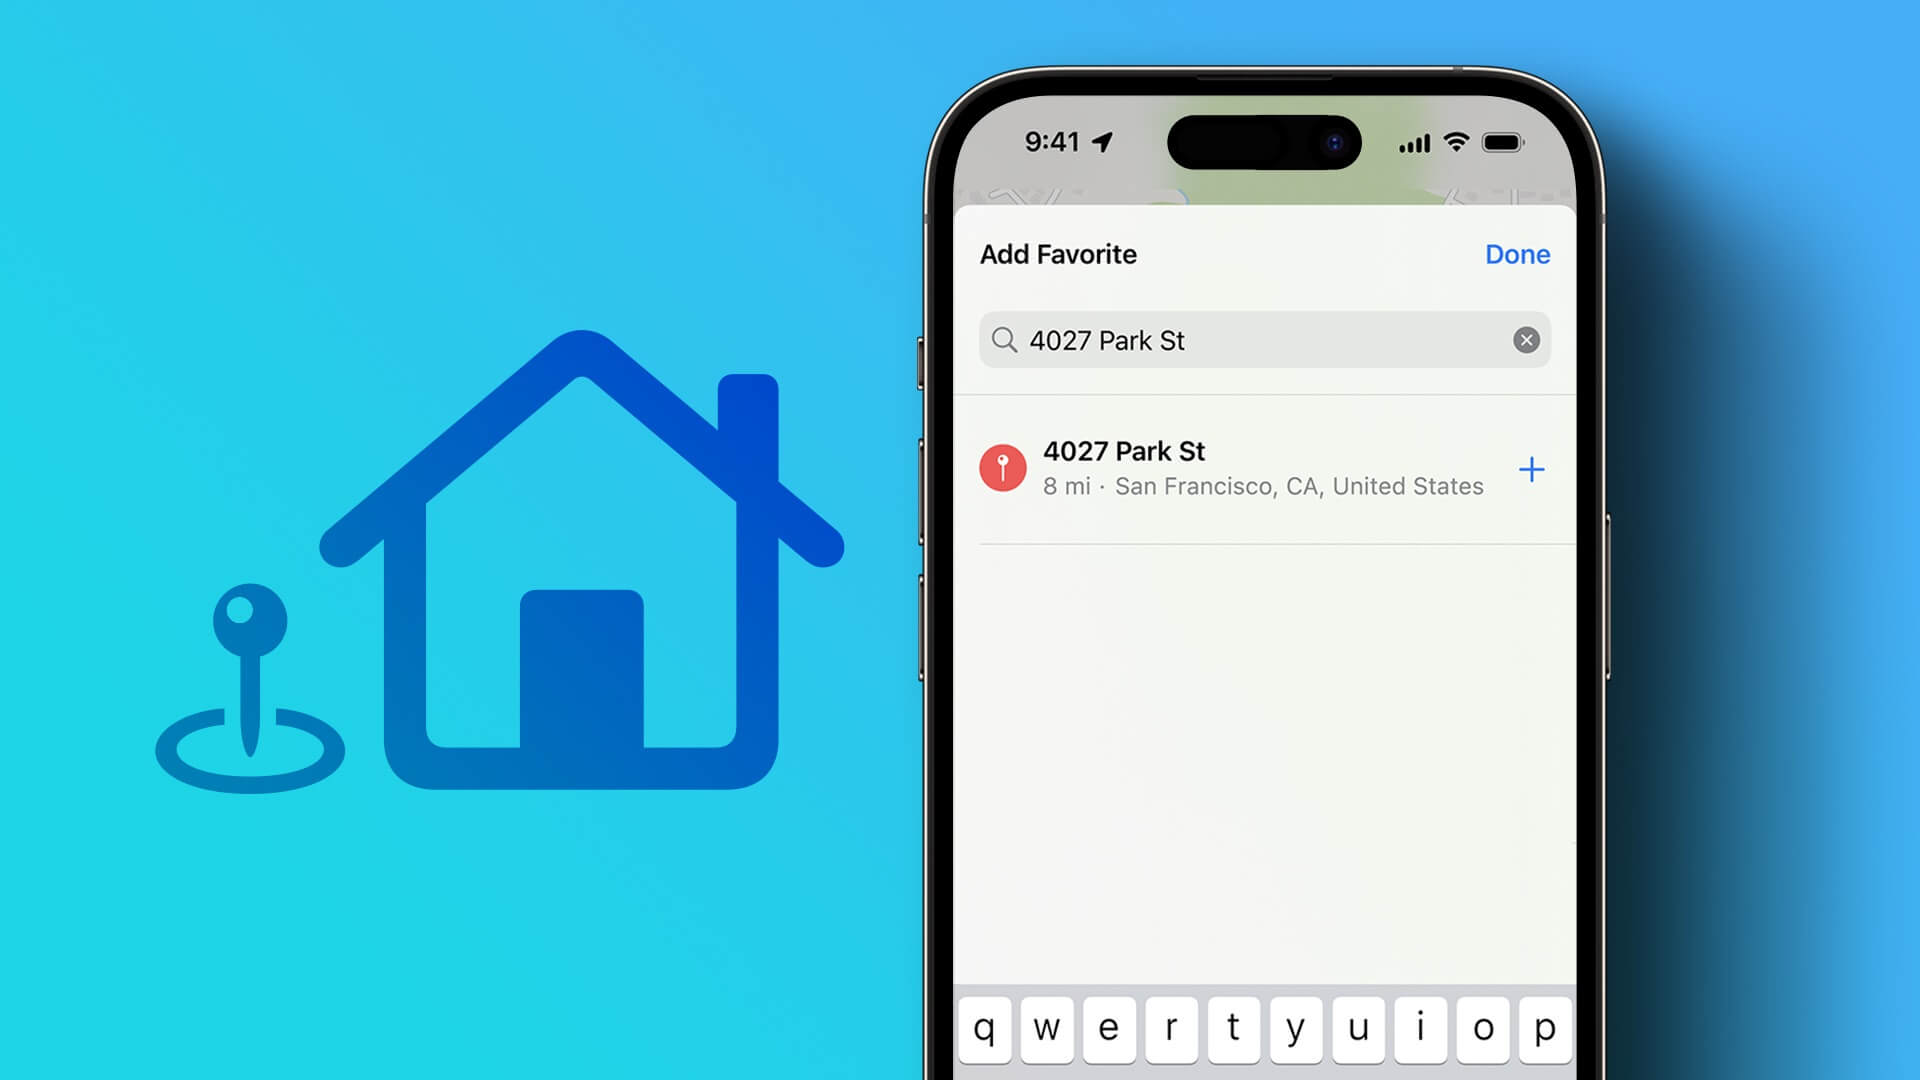 How to Add or Change Home Address in Apple Maps on iPhone - اجعل التكنولوجيا أسهل - دروس الكمبيوتر والنصائح والحيل و الصحة